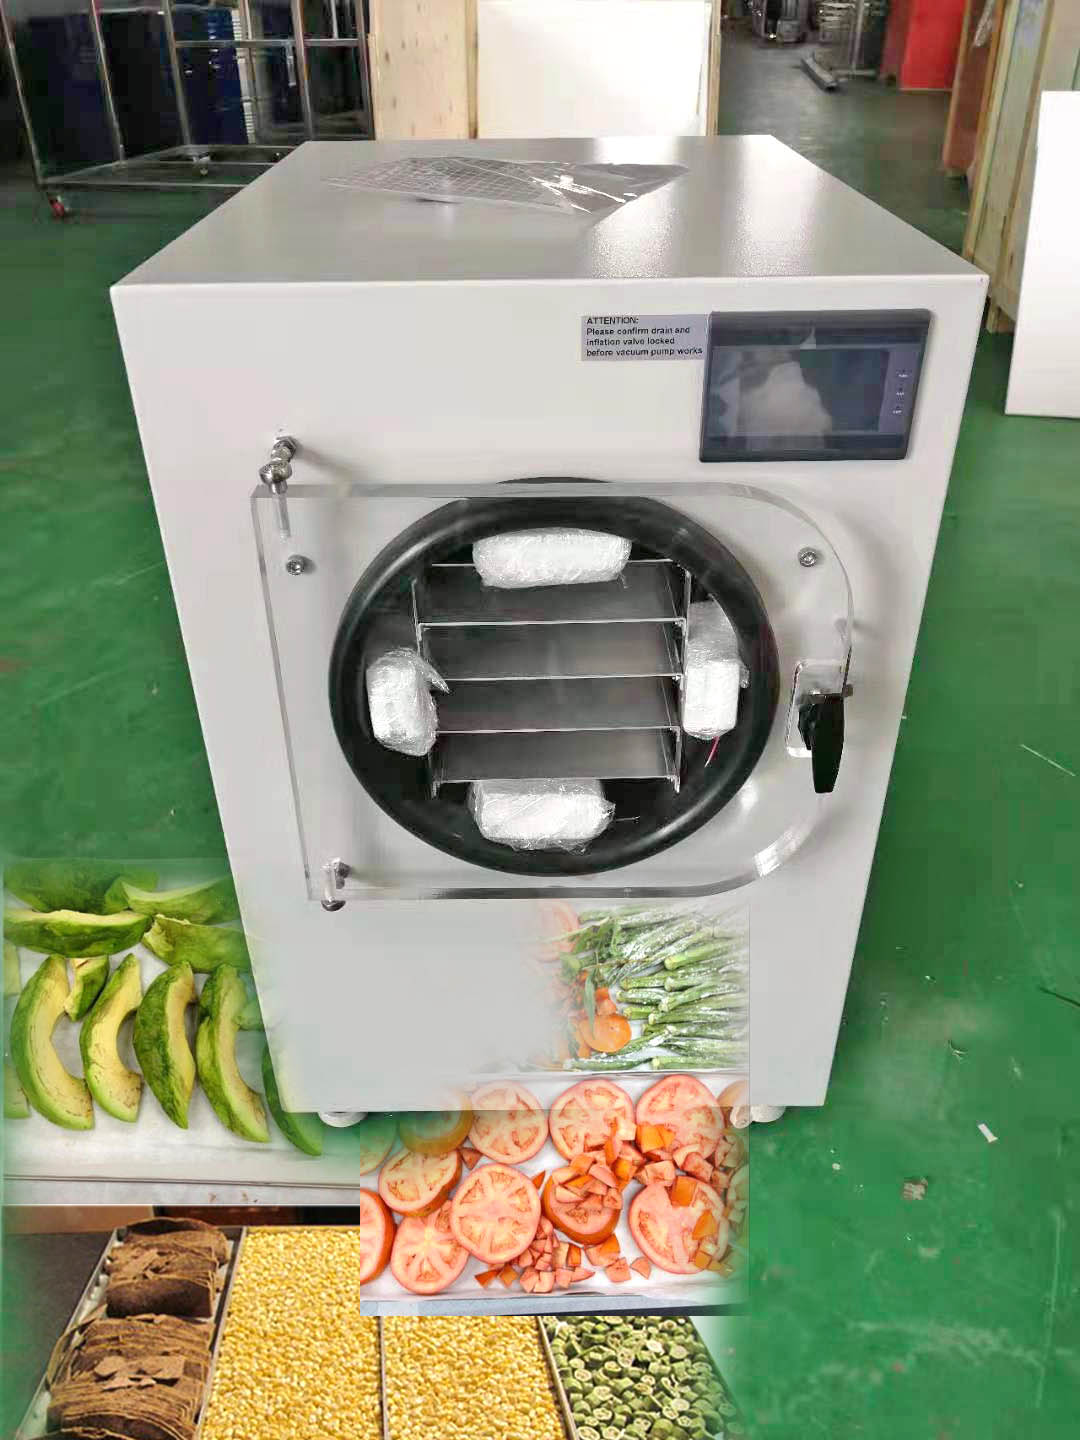 Vegetable Freeze Dehydrator Laboratory Vacuum Food Freeze Dryer